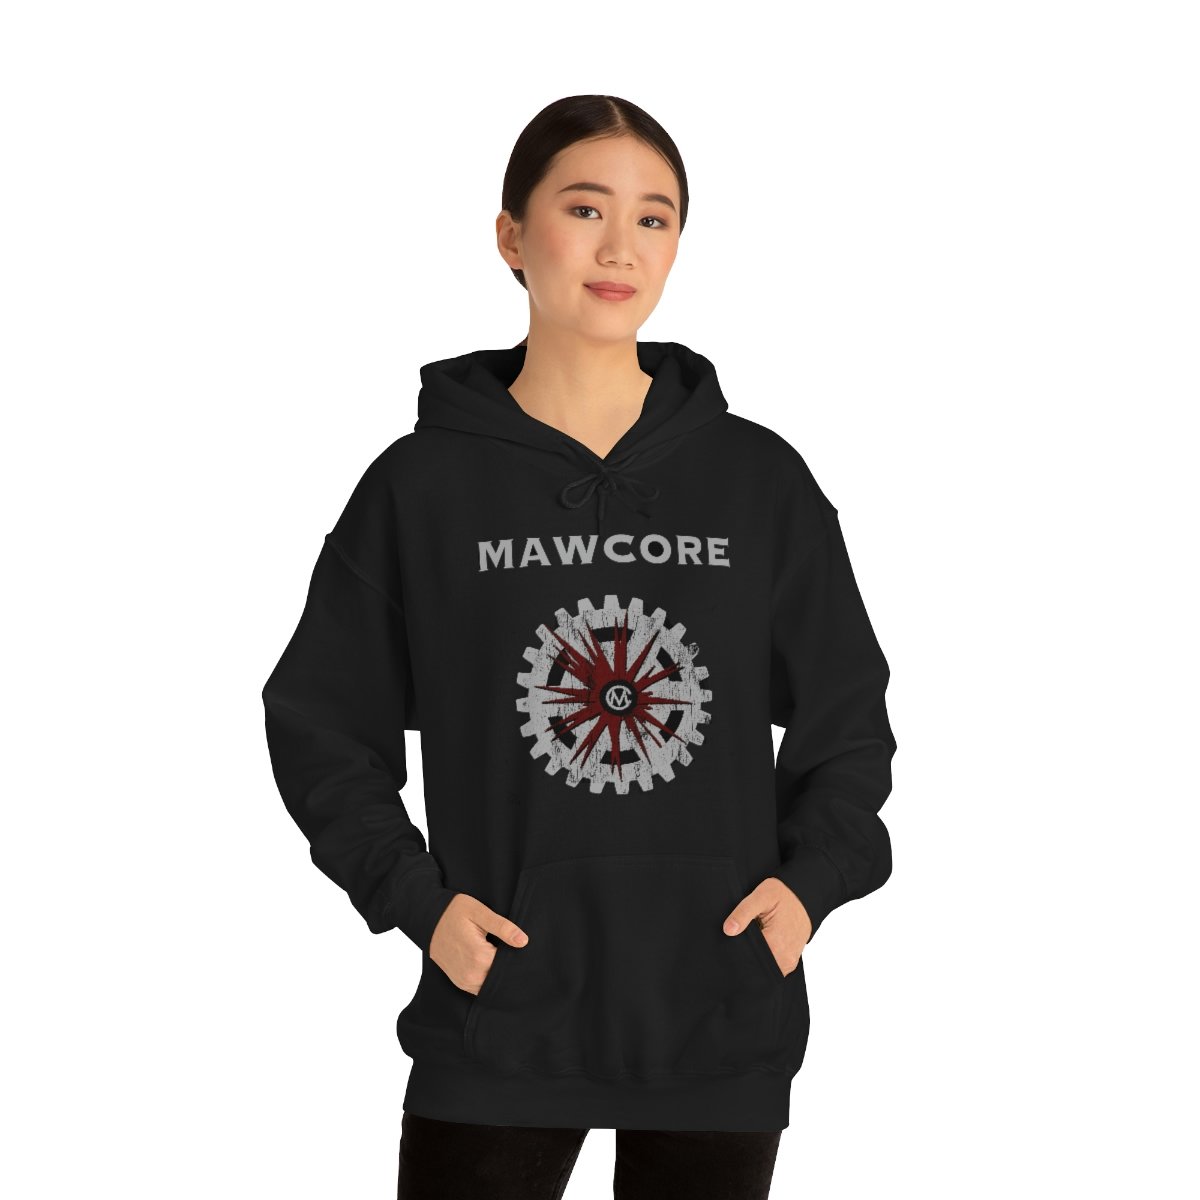 Mawcore Gear Pullover Hooded Sweatshirt